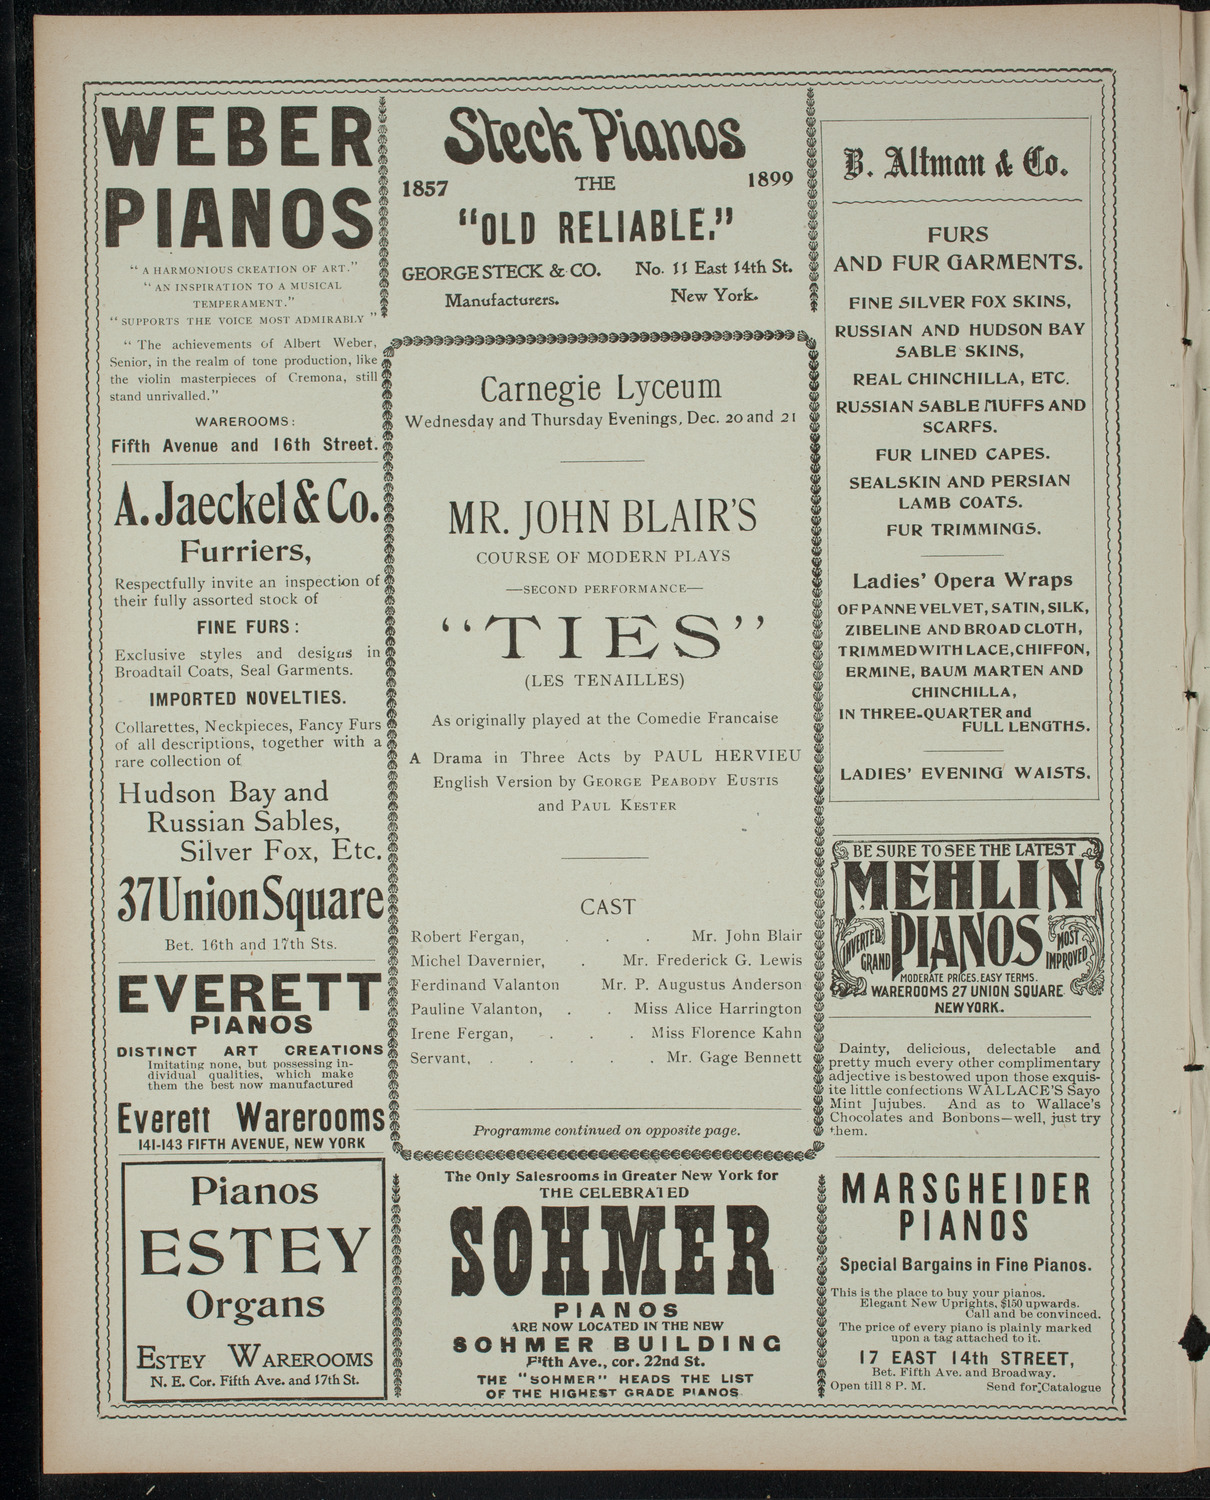 Mr. John Blair's Course of Modern Plays, December 21, 1899, program page 2